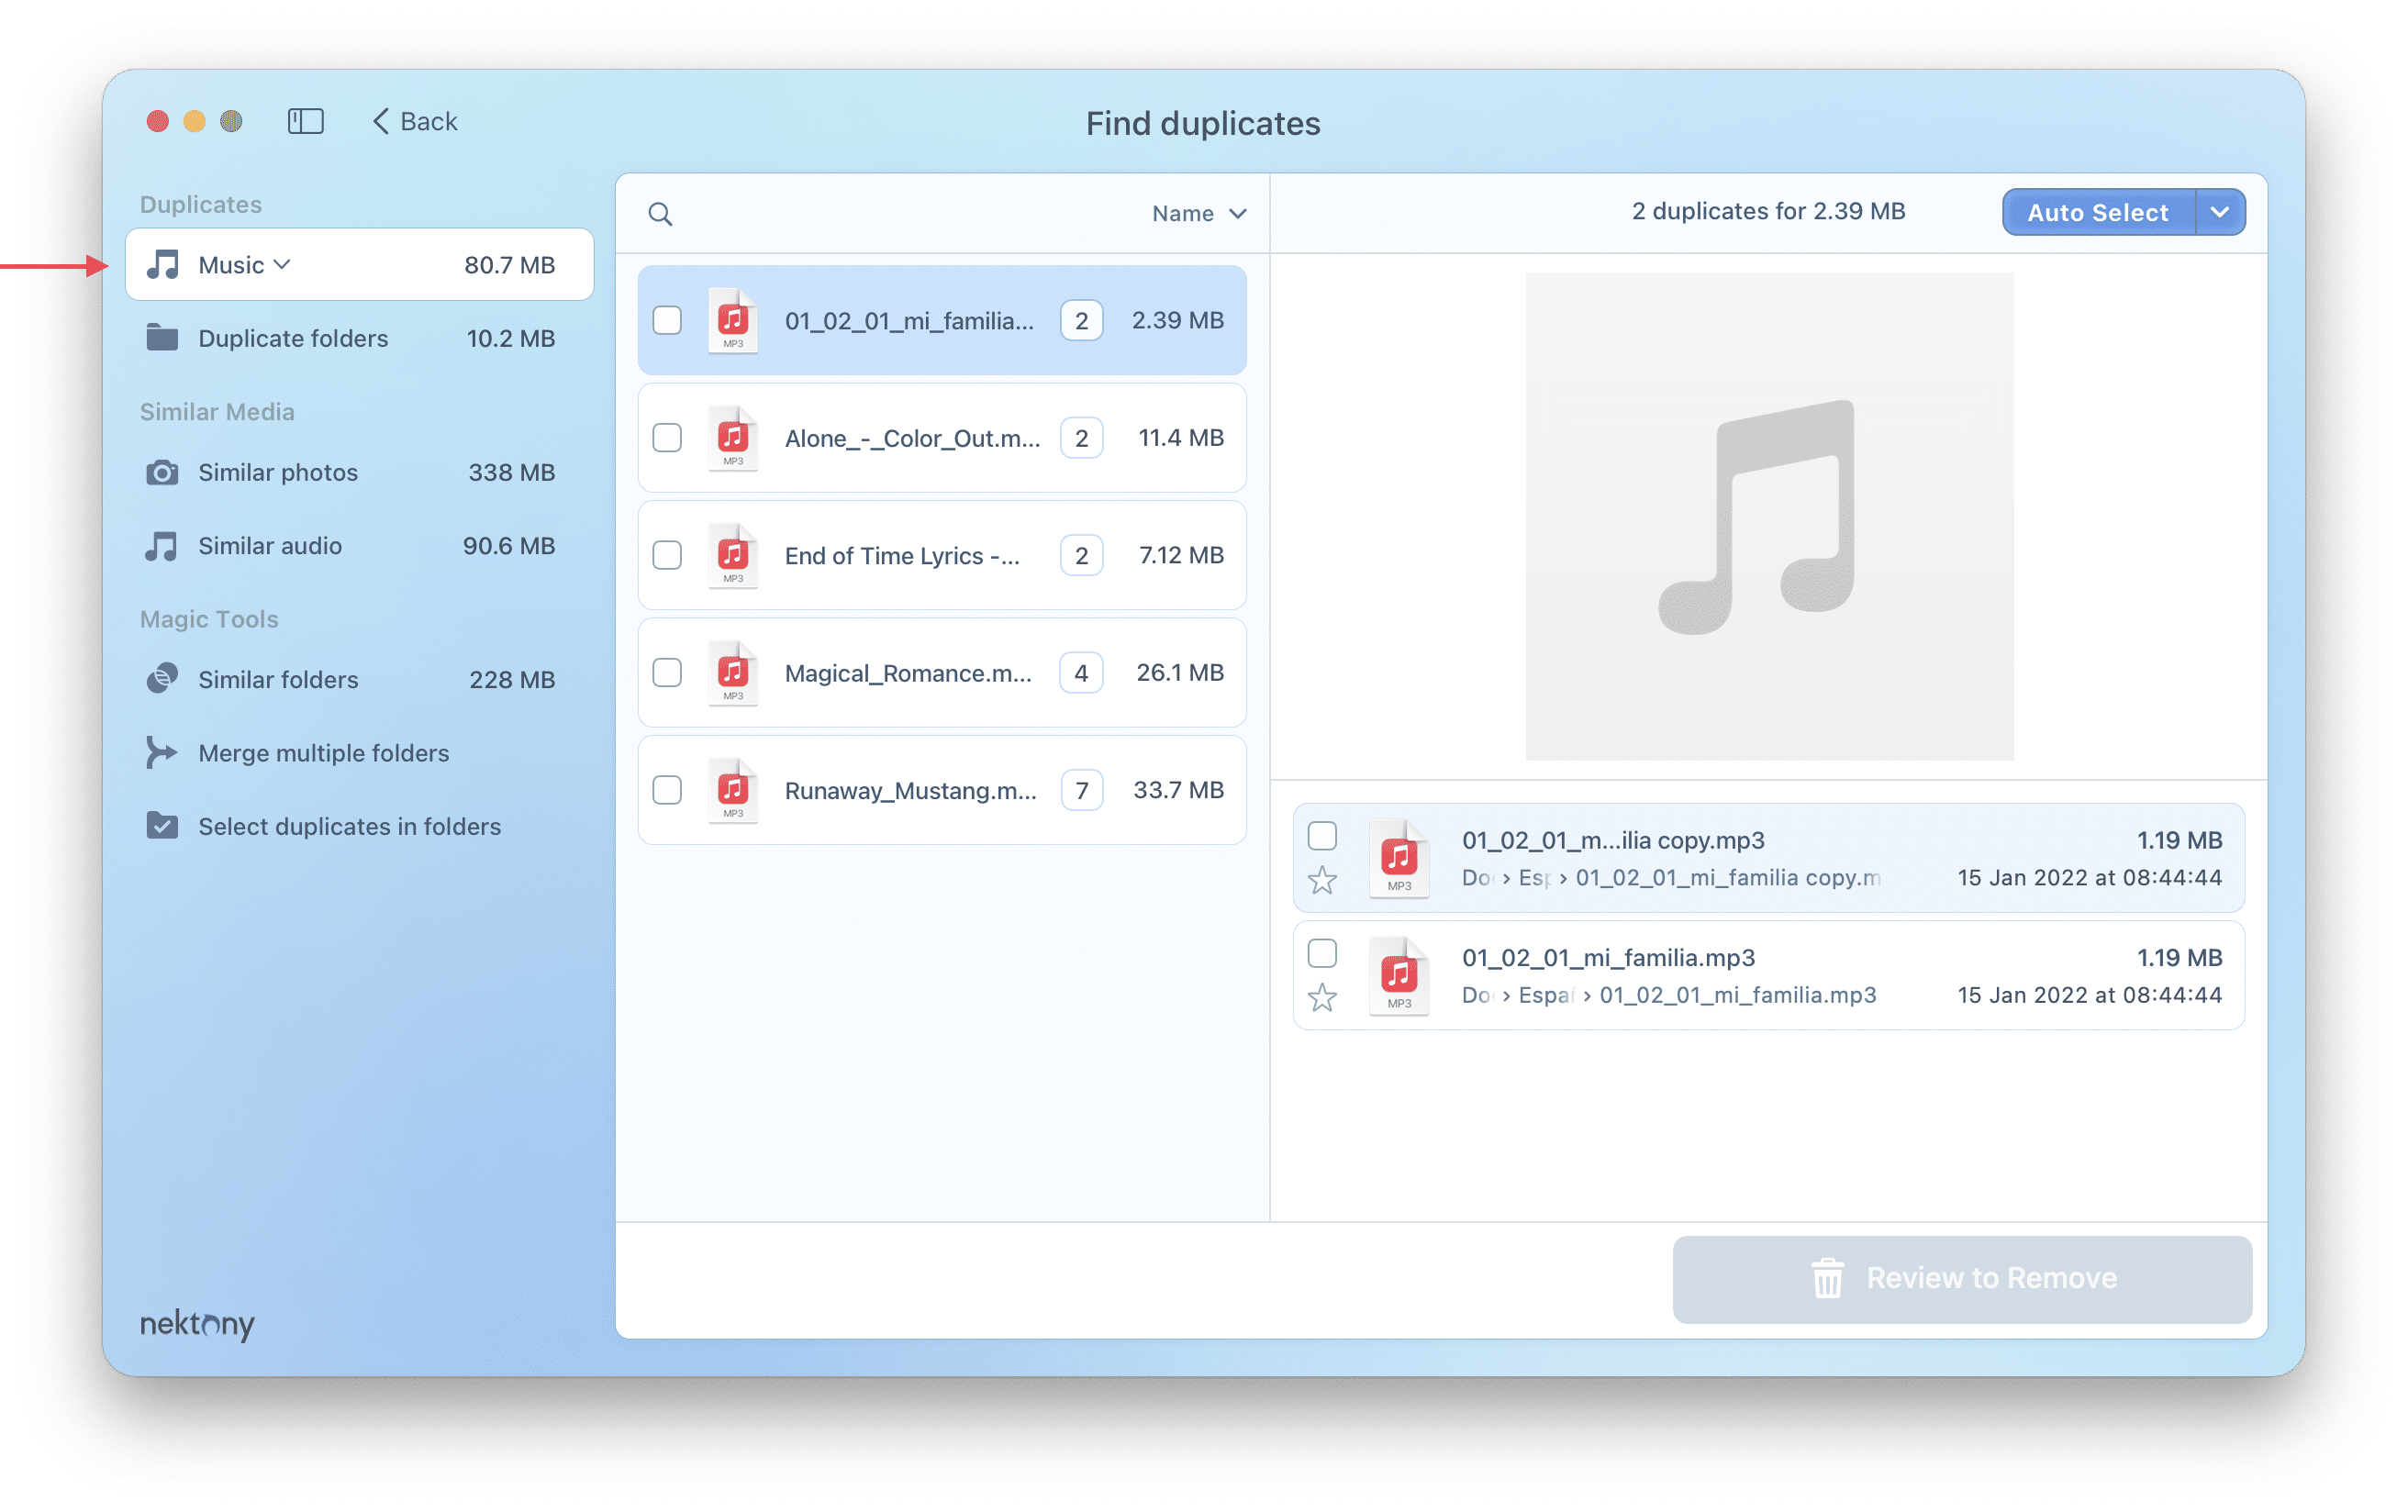 Duplicate file finder window showing duplicate music files